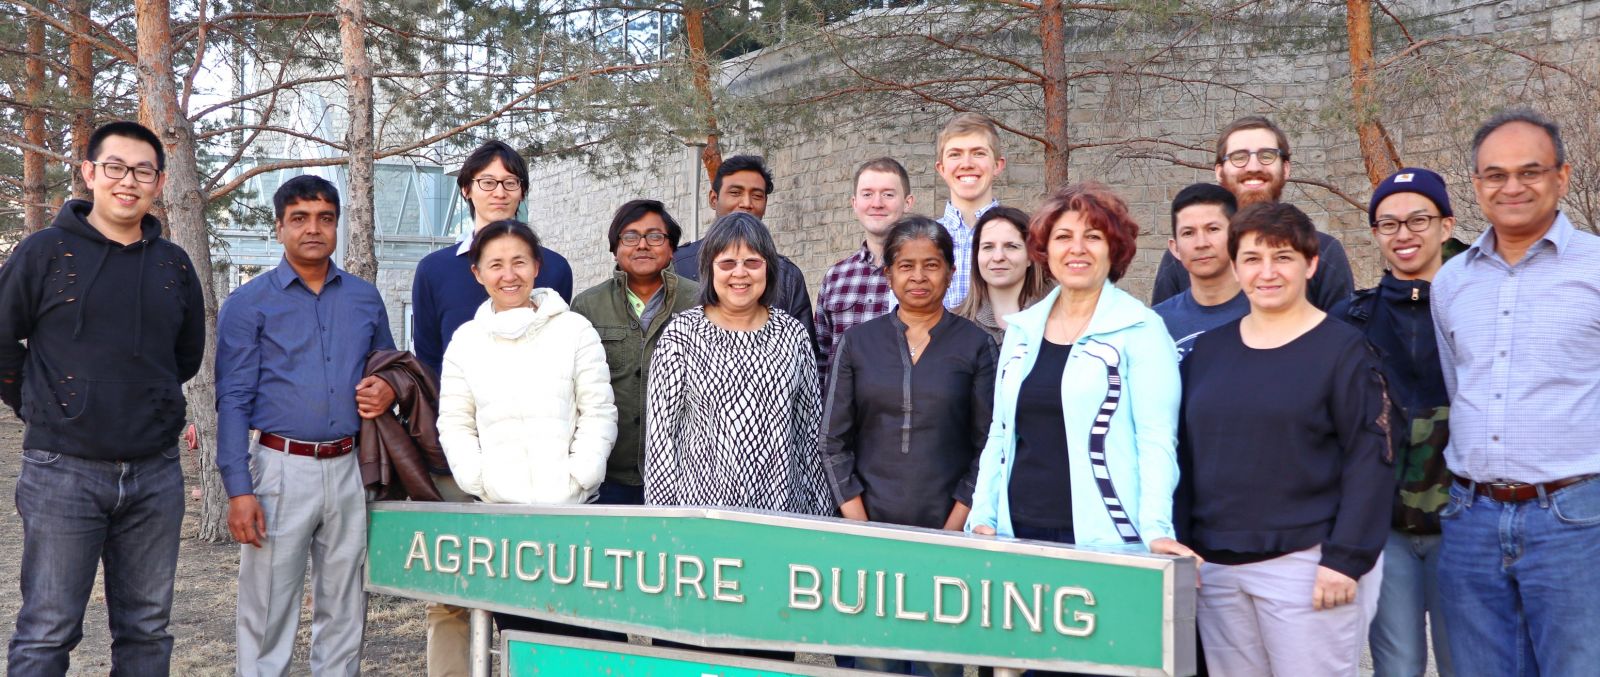 The Karen Tanino research group at the University of Saskatchewan.